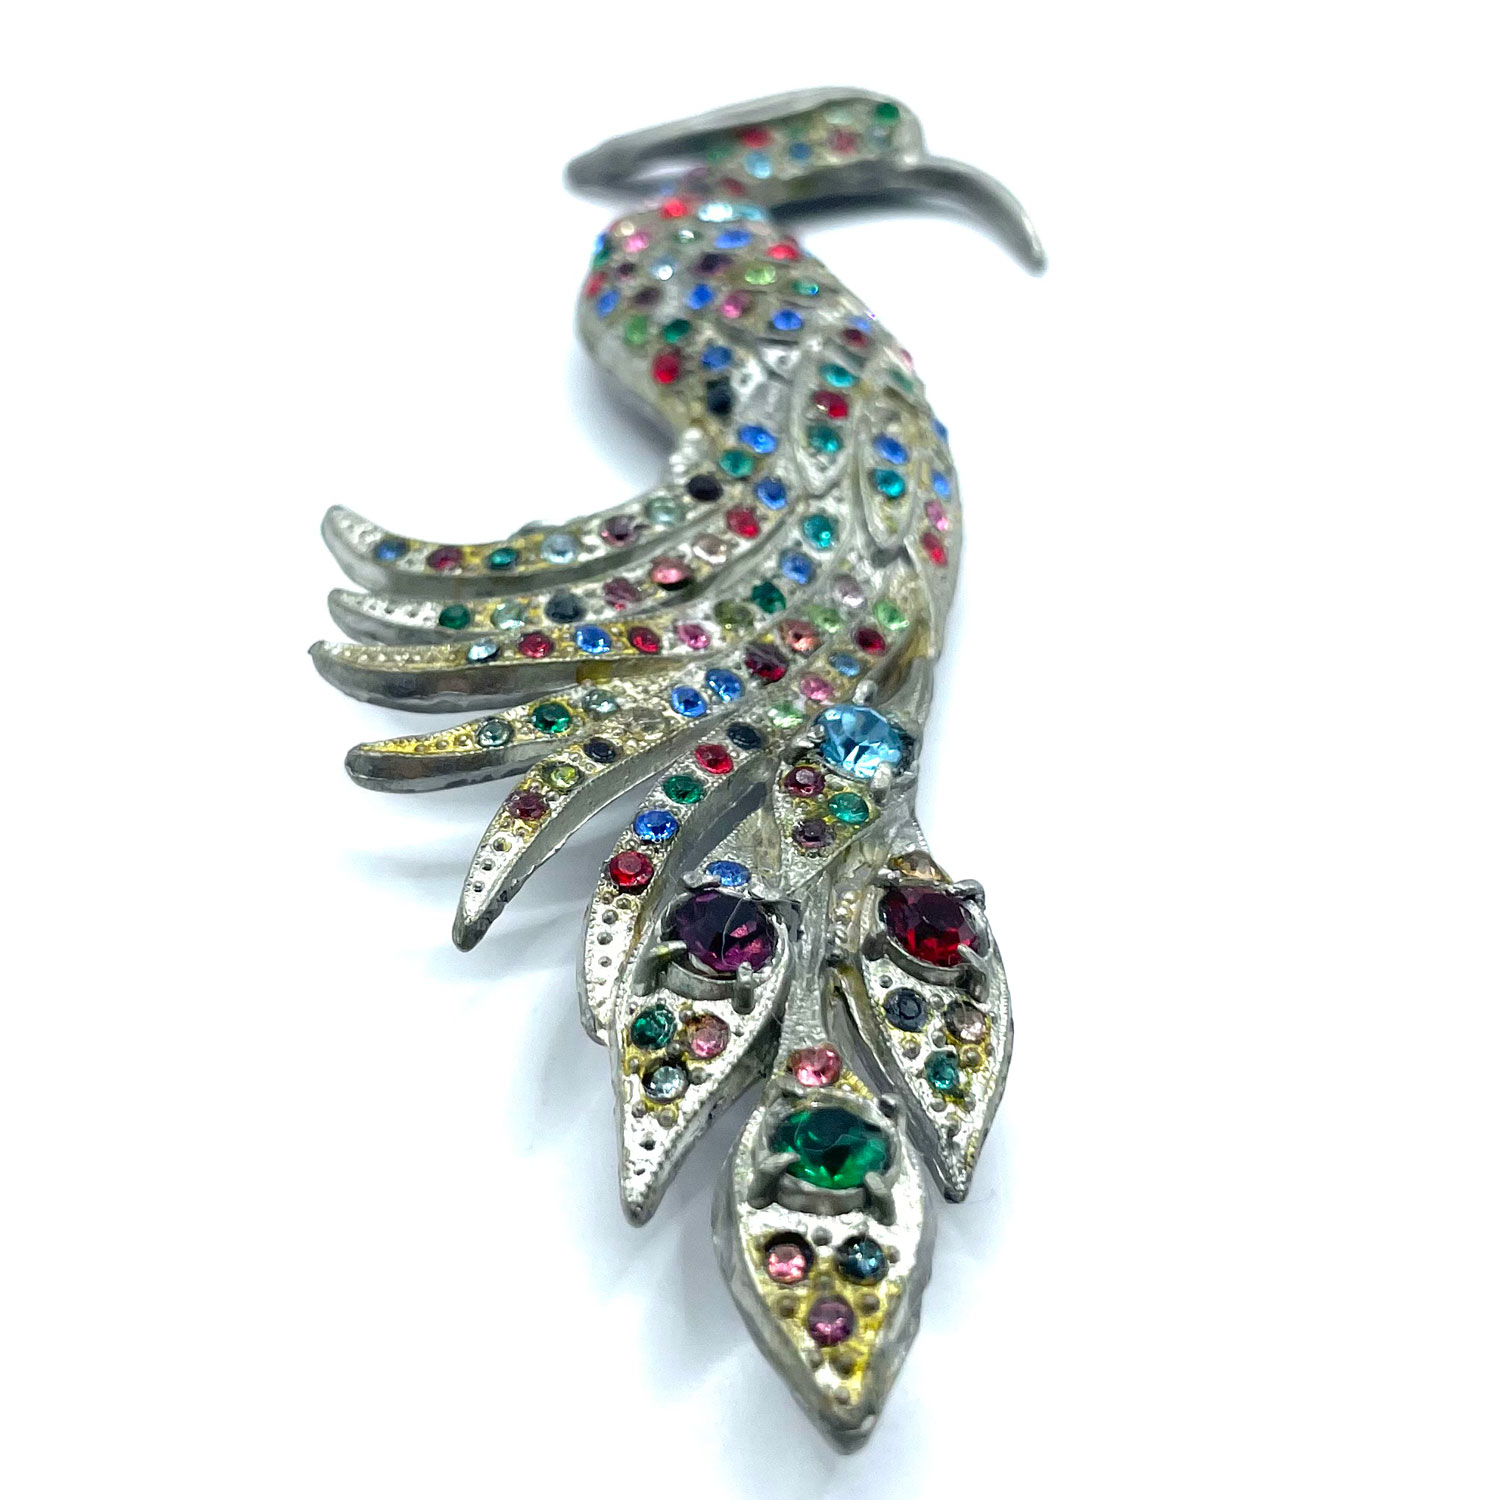 1930s Art Deco peacock brooch